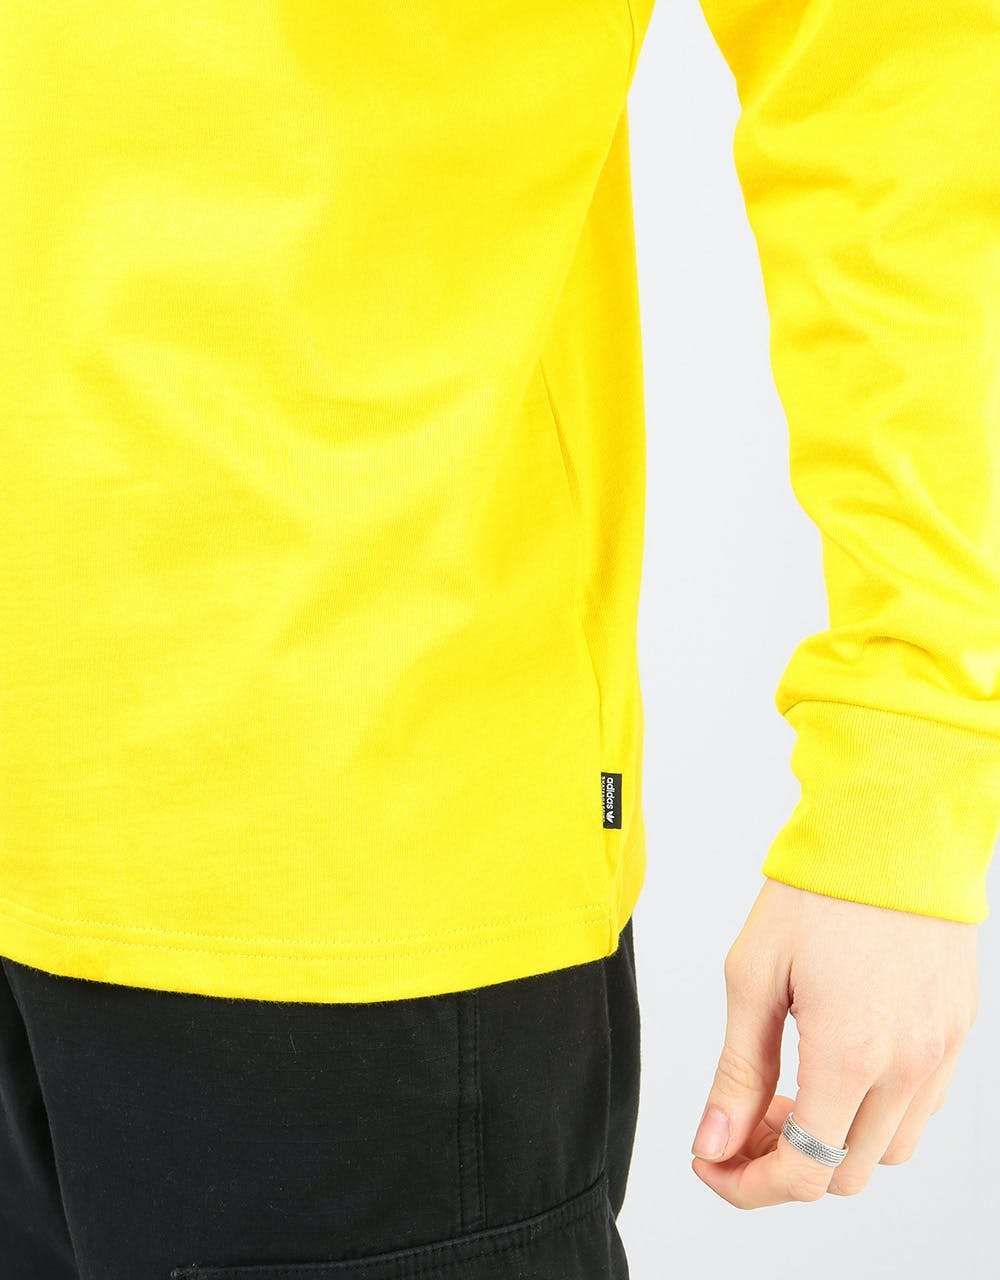 Adidas x Evisen L/S T-Shirt - Yellow/Scarlet